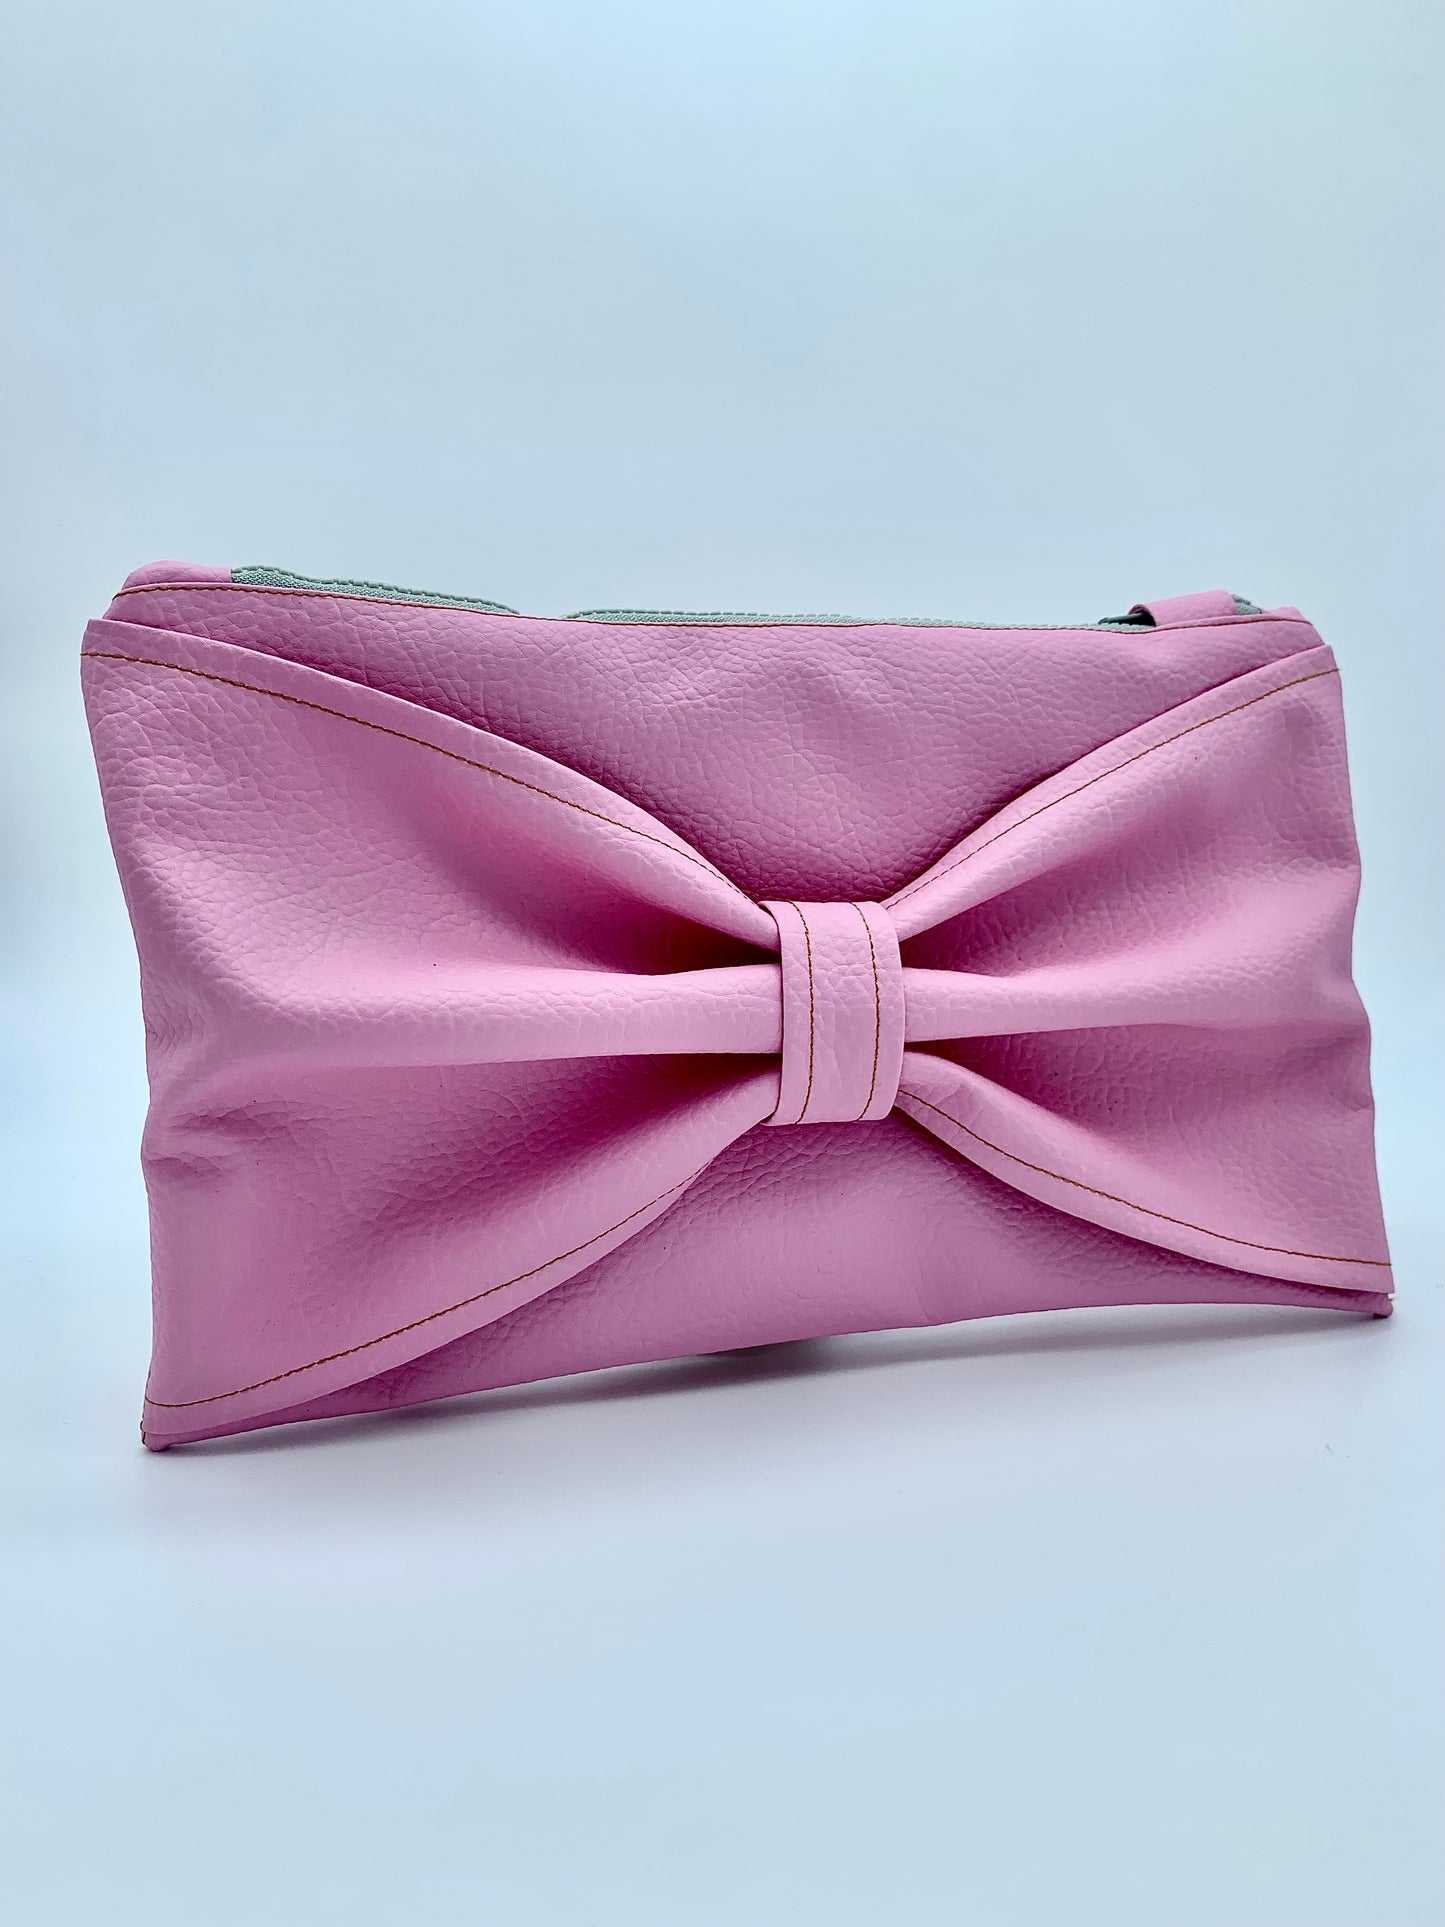 Bag 2021. Baby pink